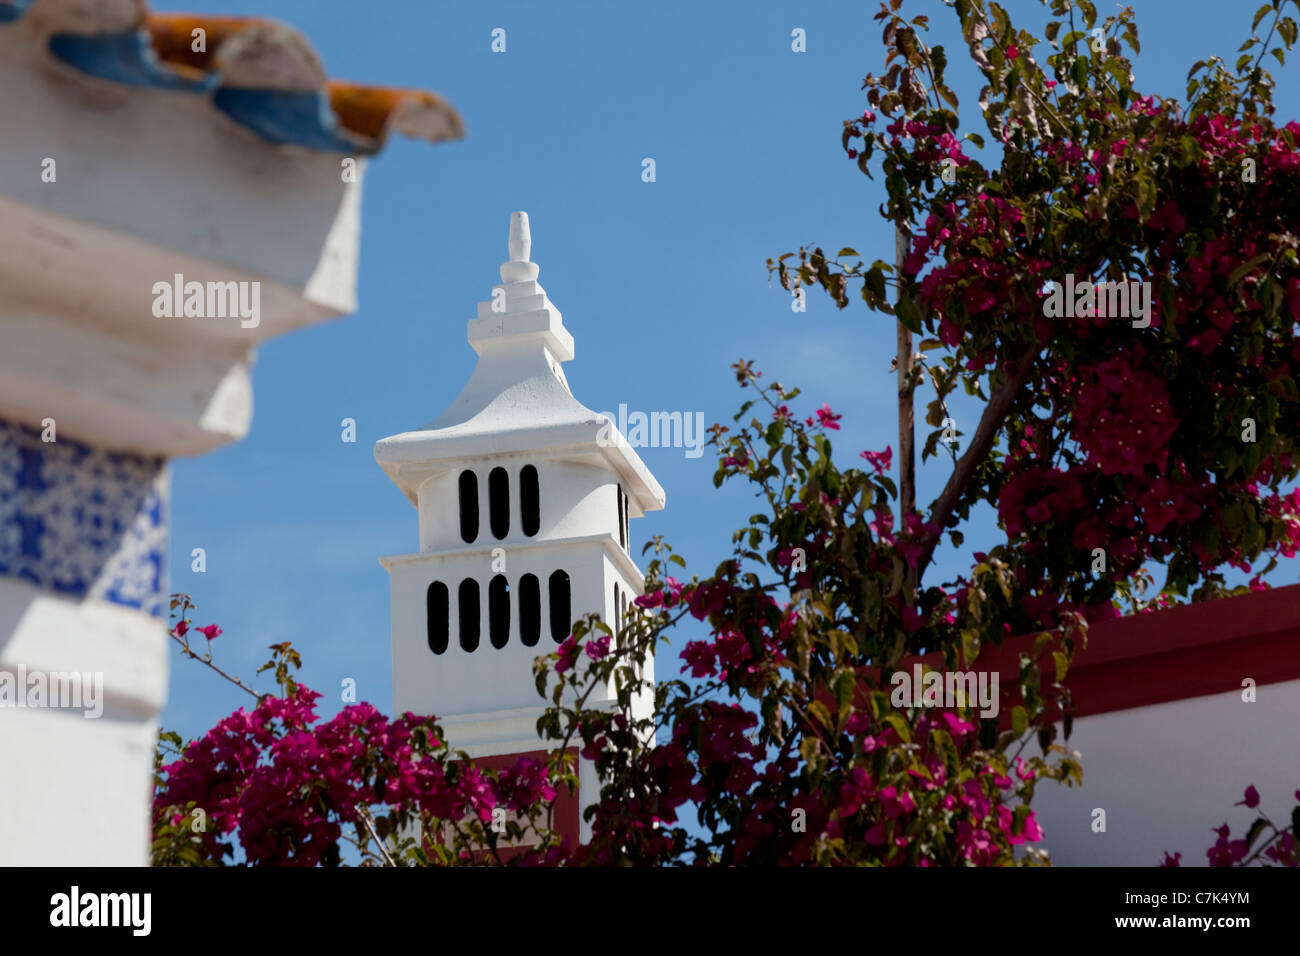 Portugal, Algarve, Alte, Flowers & Chimney Stock Photo